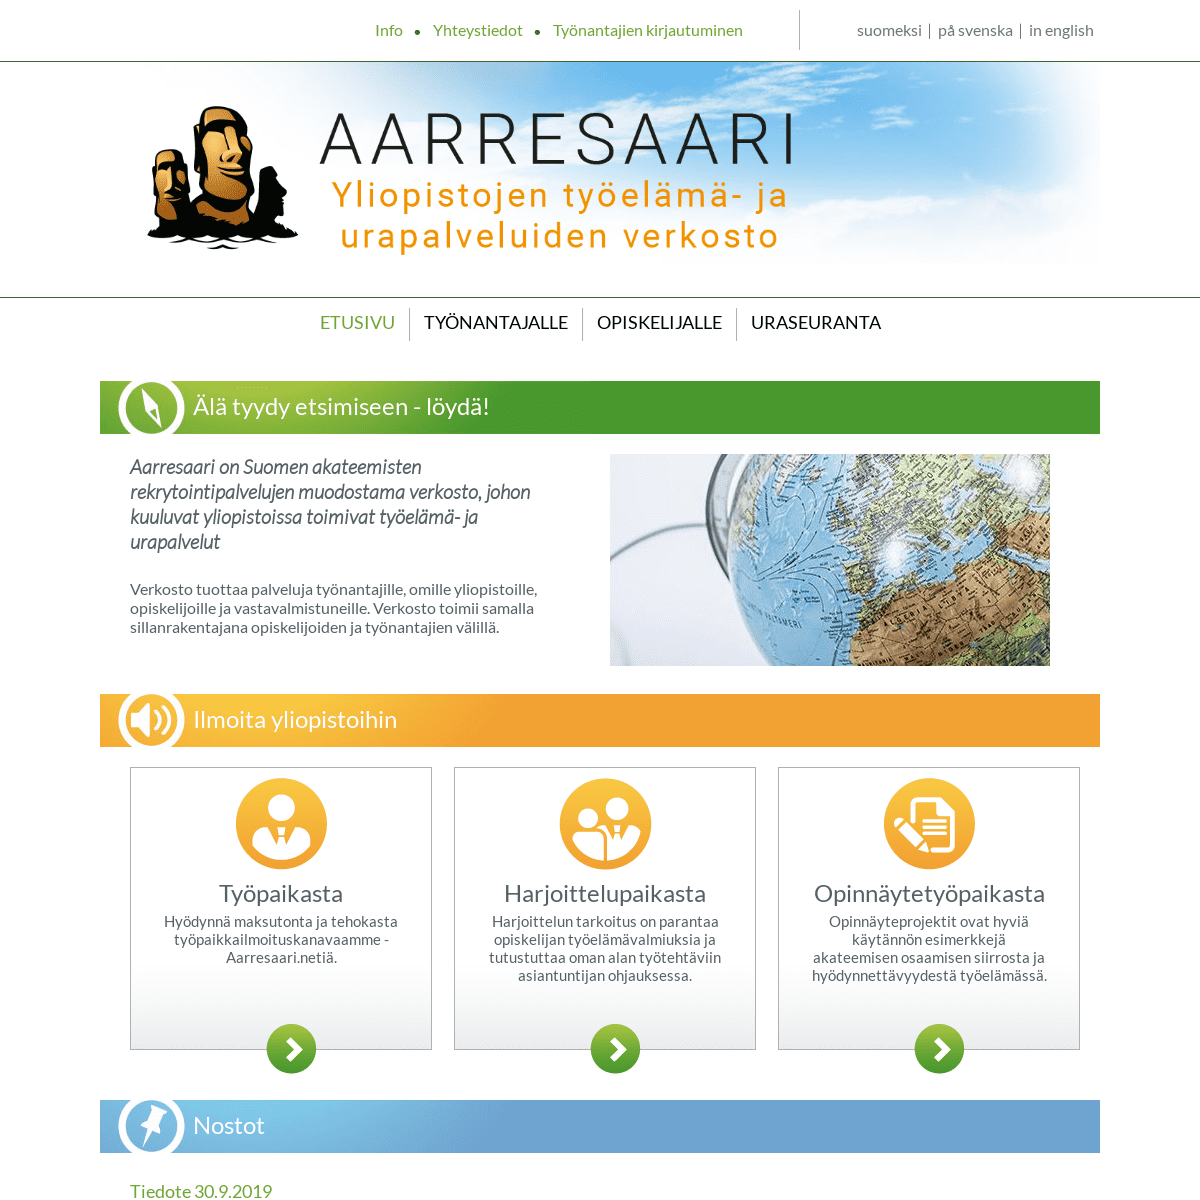 A complete backup of aarresaari.net